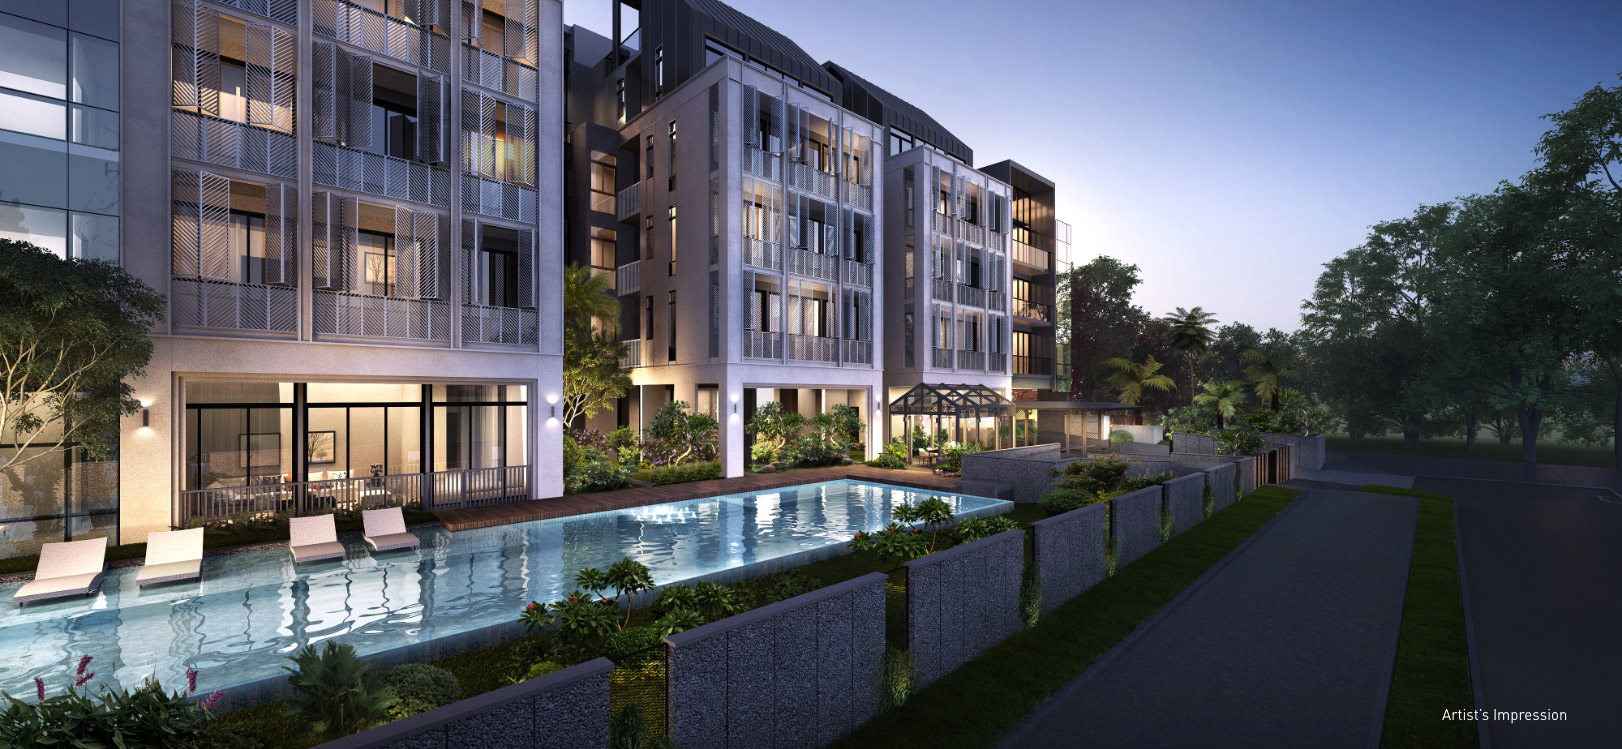 Olloi Condo - Landscape design perspective with the project's swimming pool